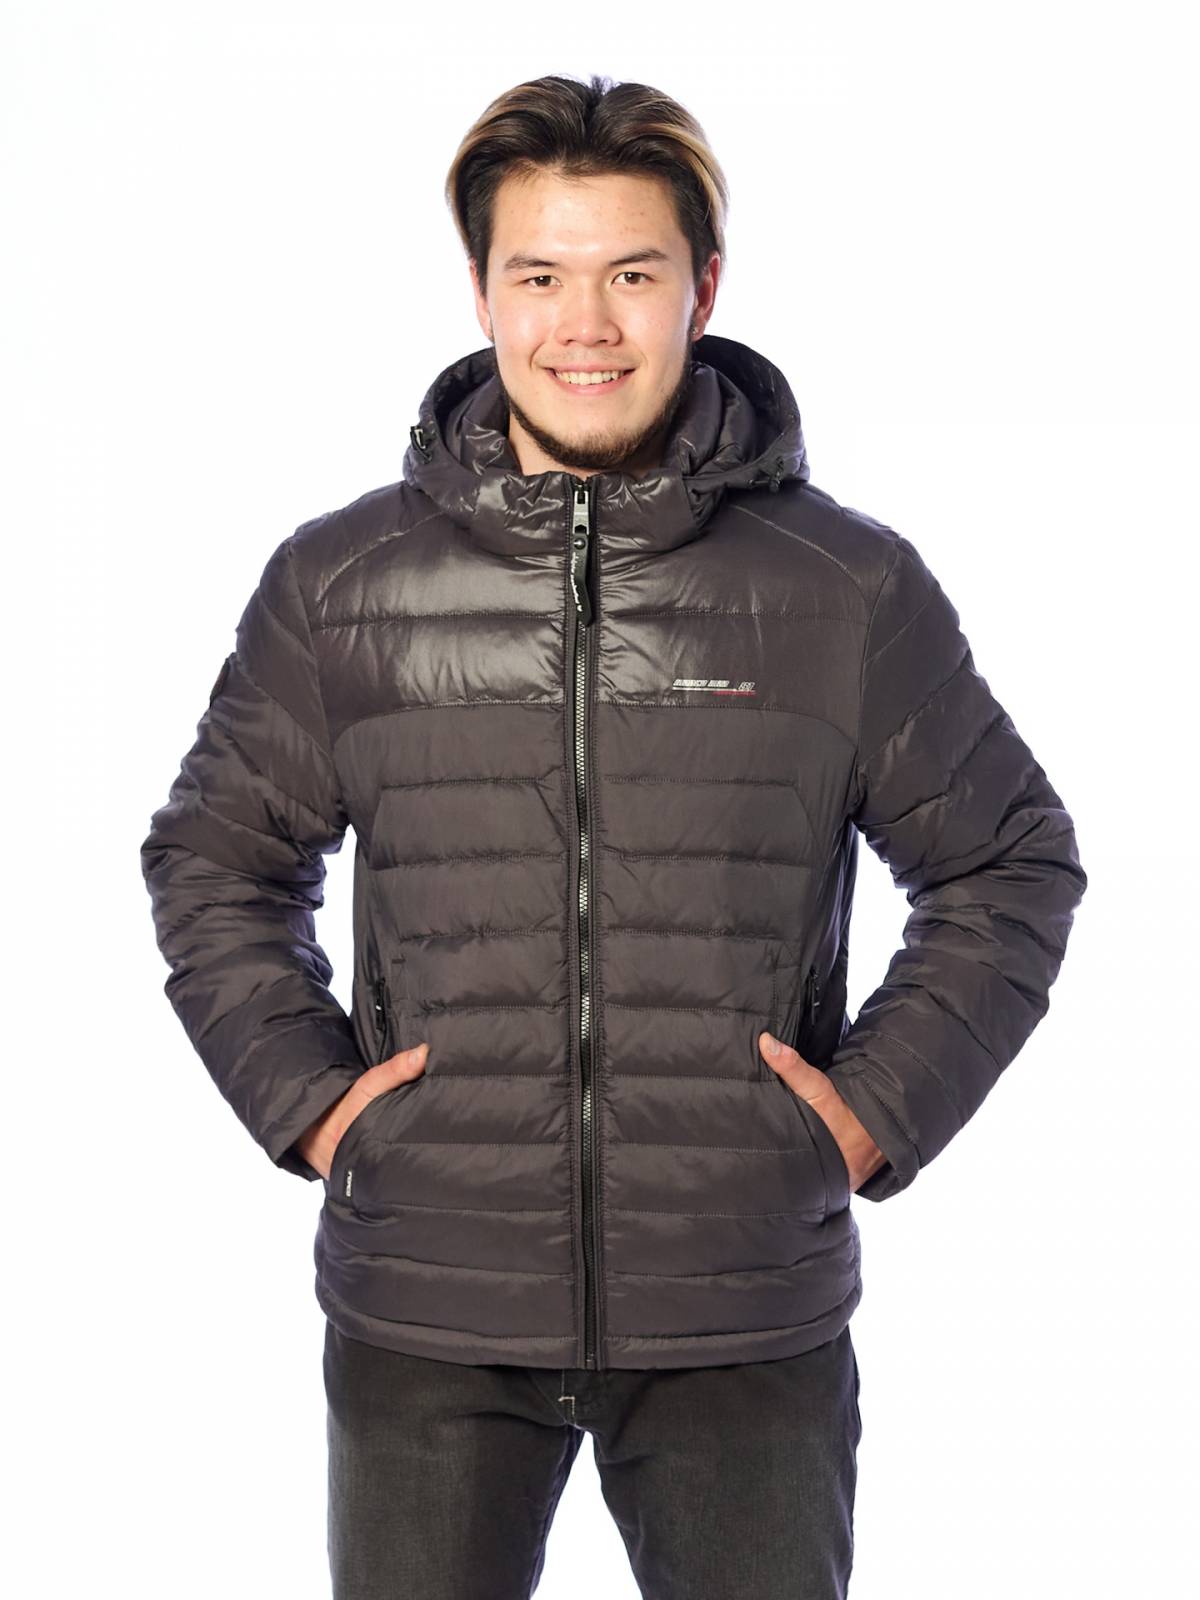 Зимняя куртка мужская Indaco 4183 серая 50 RU